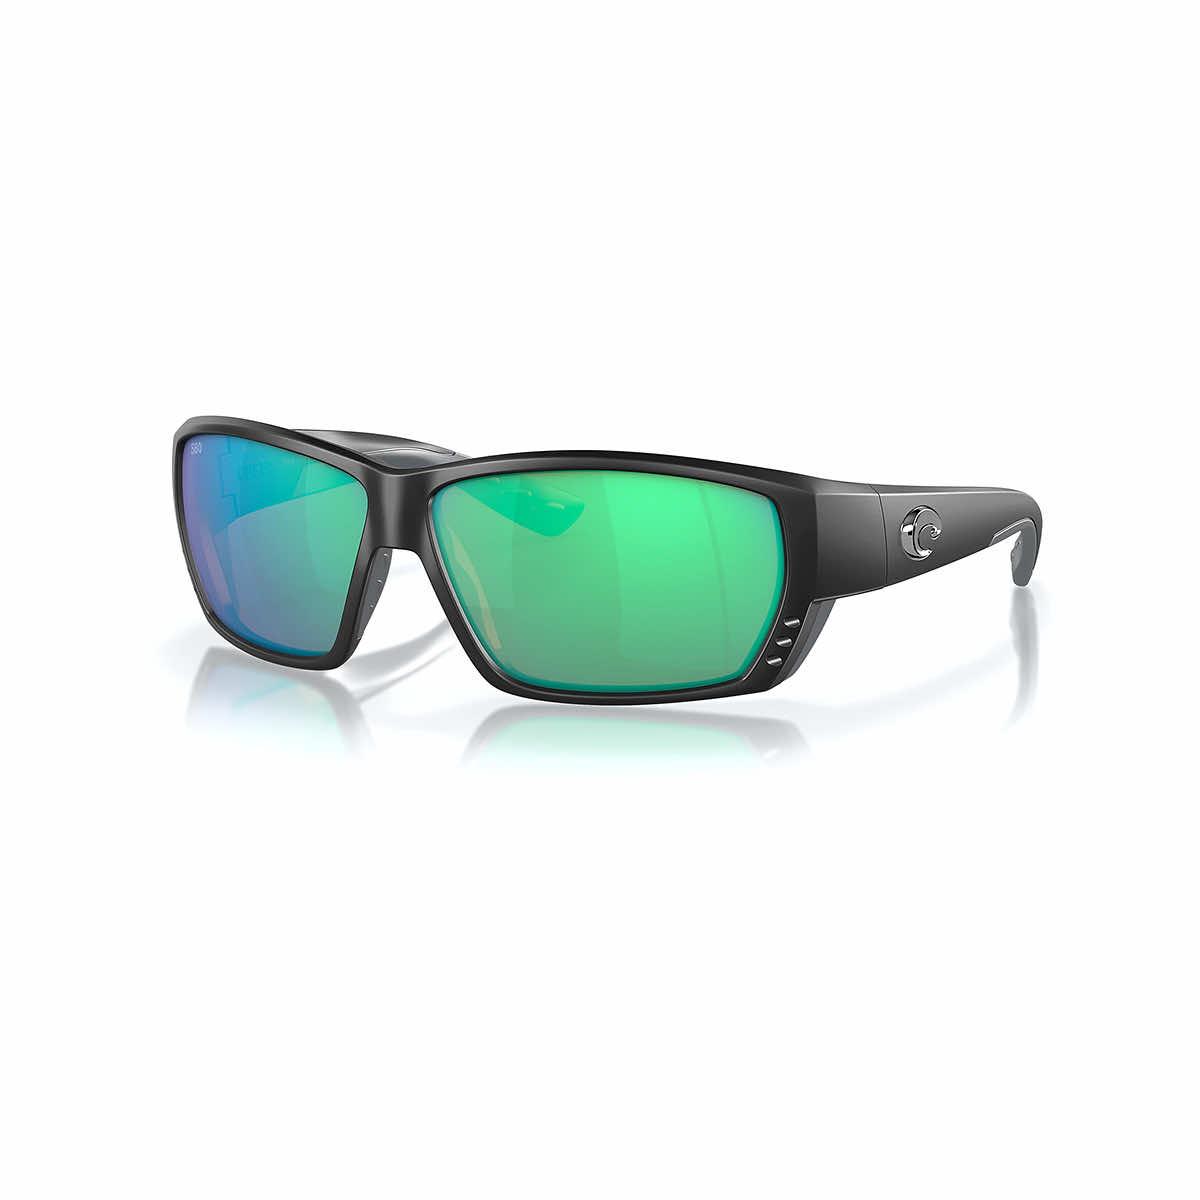  Tuna Alley 580g Sunglasses - Polarized Glass